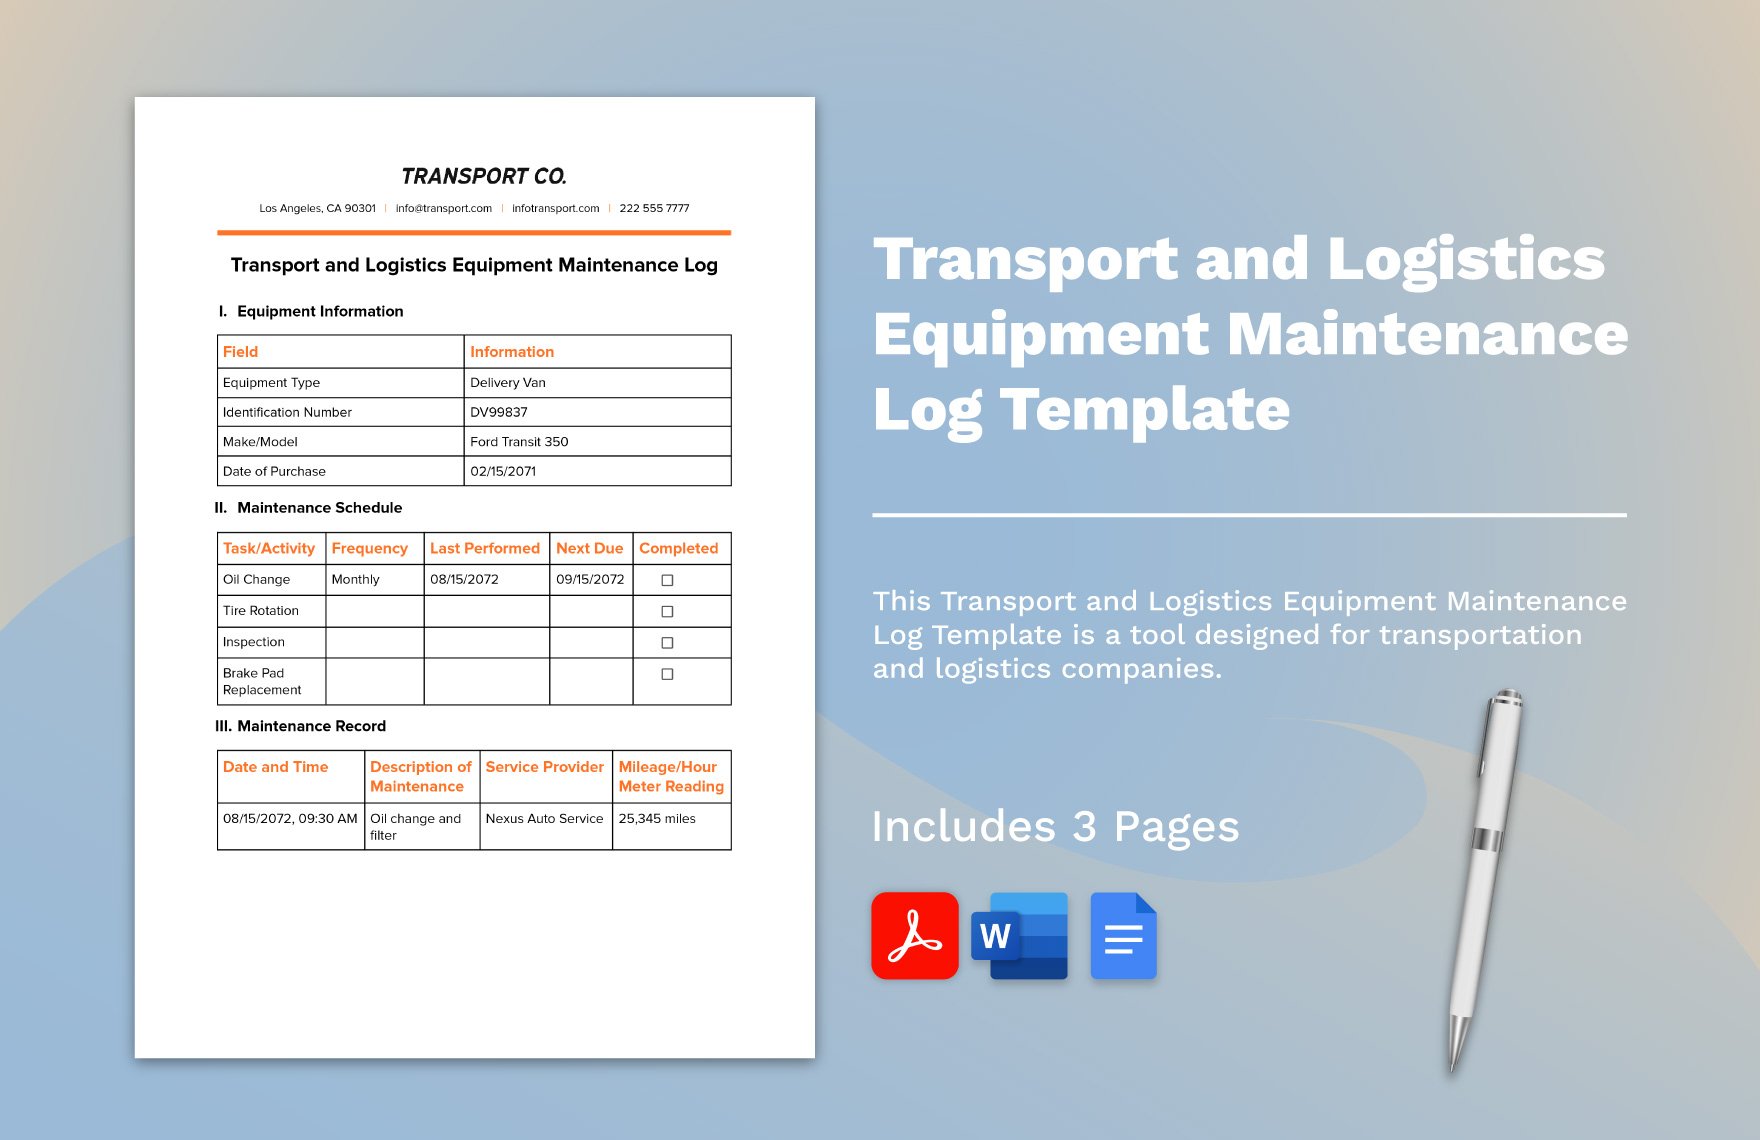 Transport and Logistics Equipment Maintenance Log Template